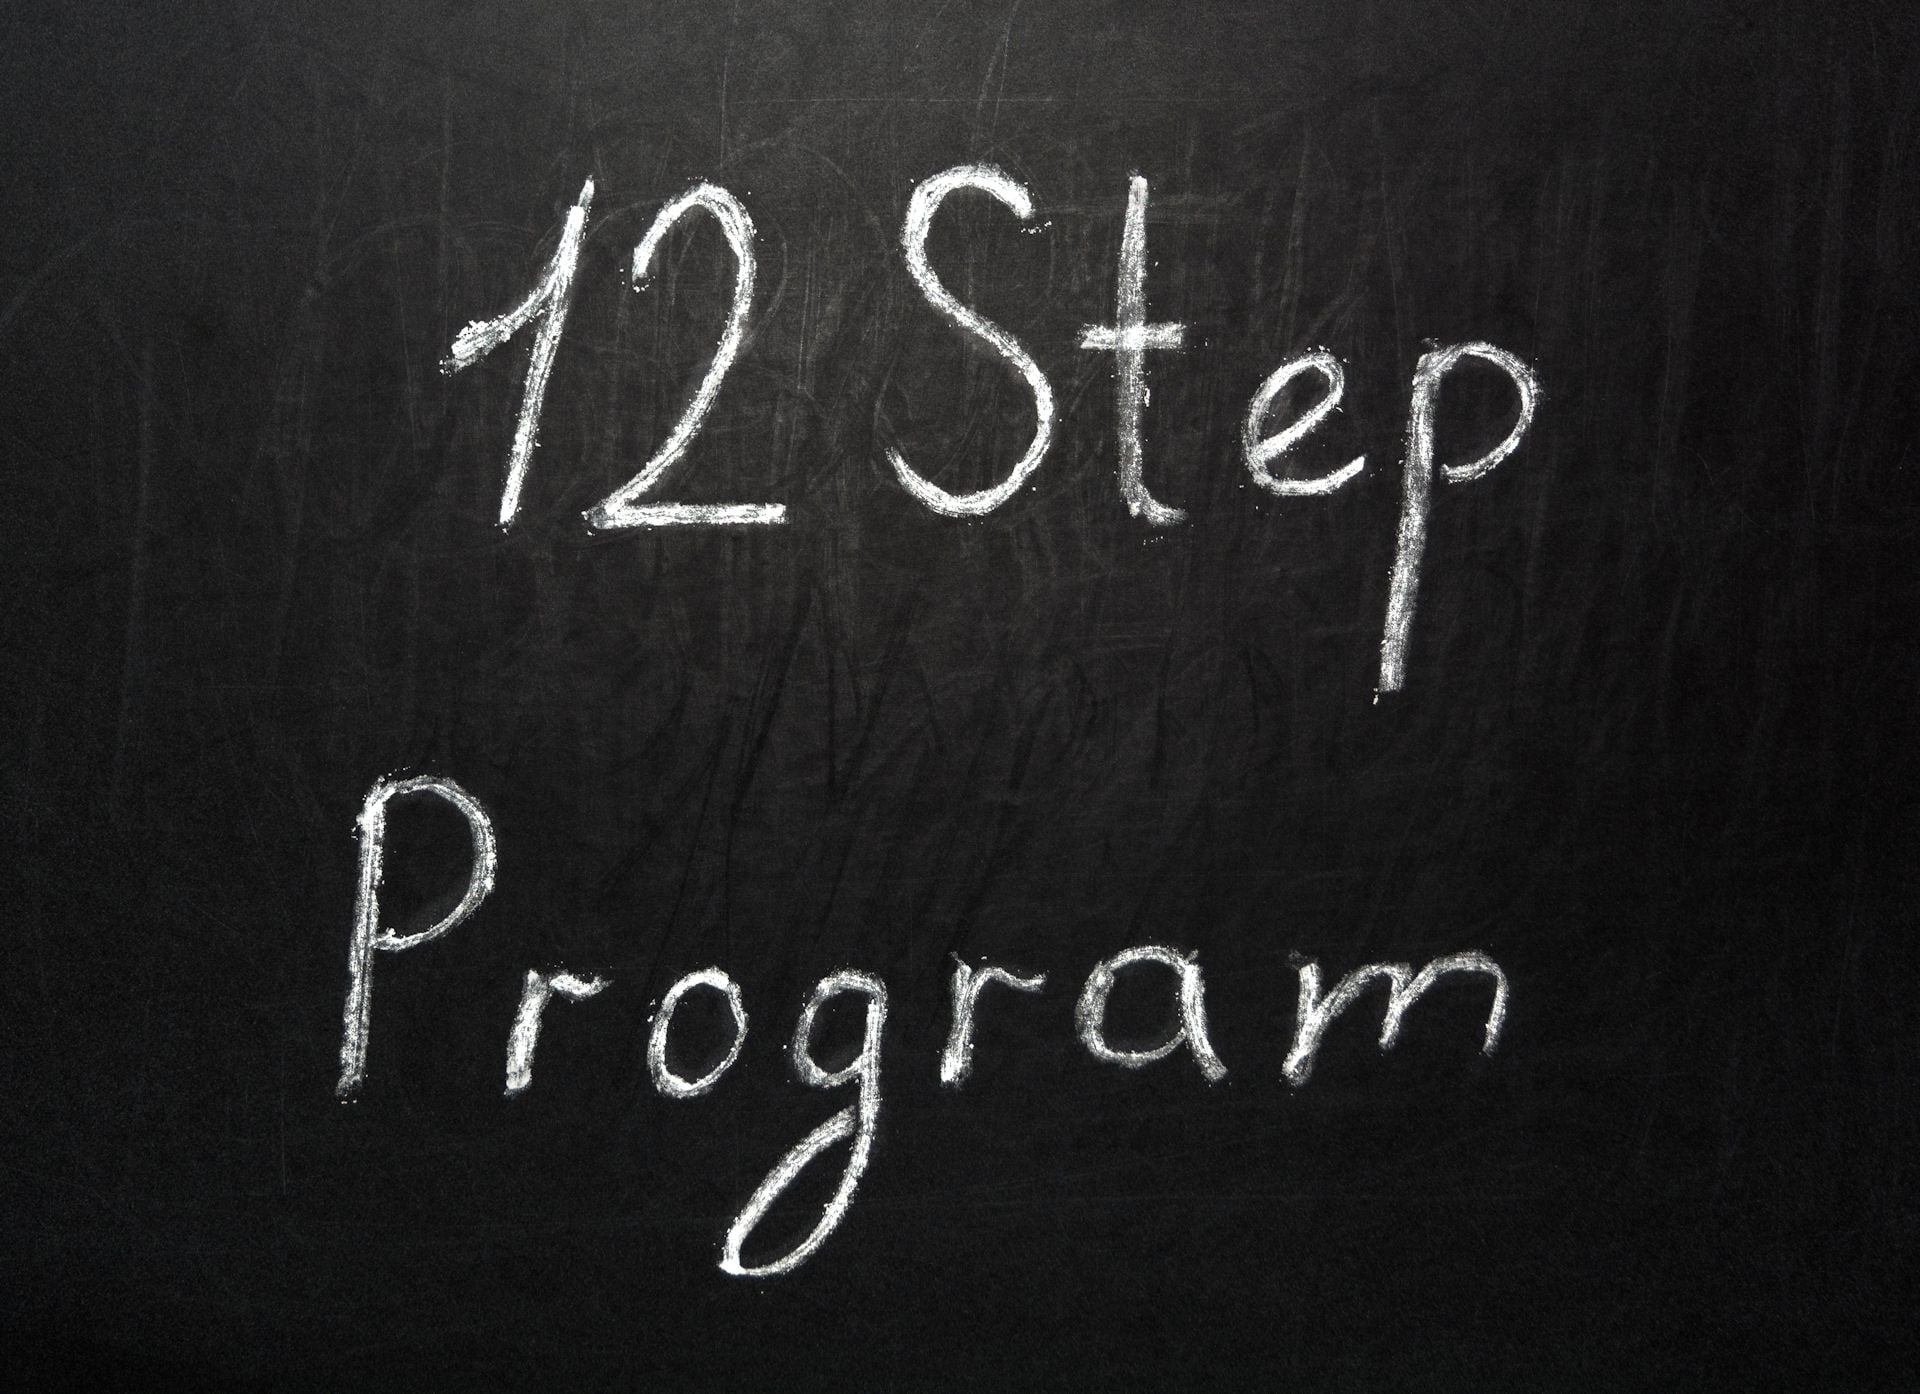 12-STEP PROGRAM